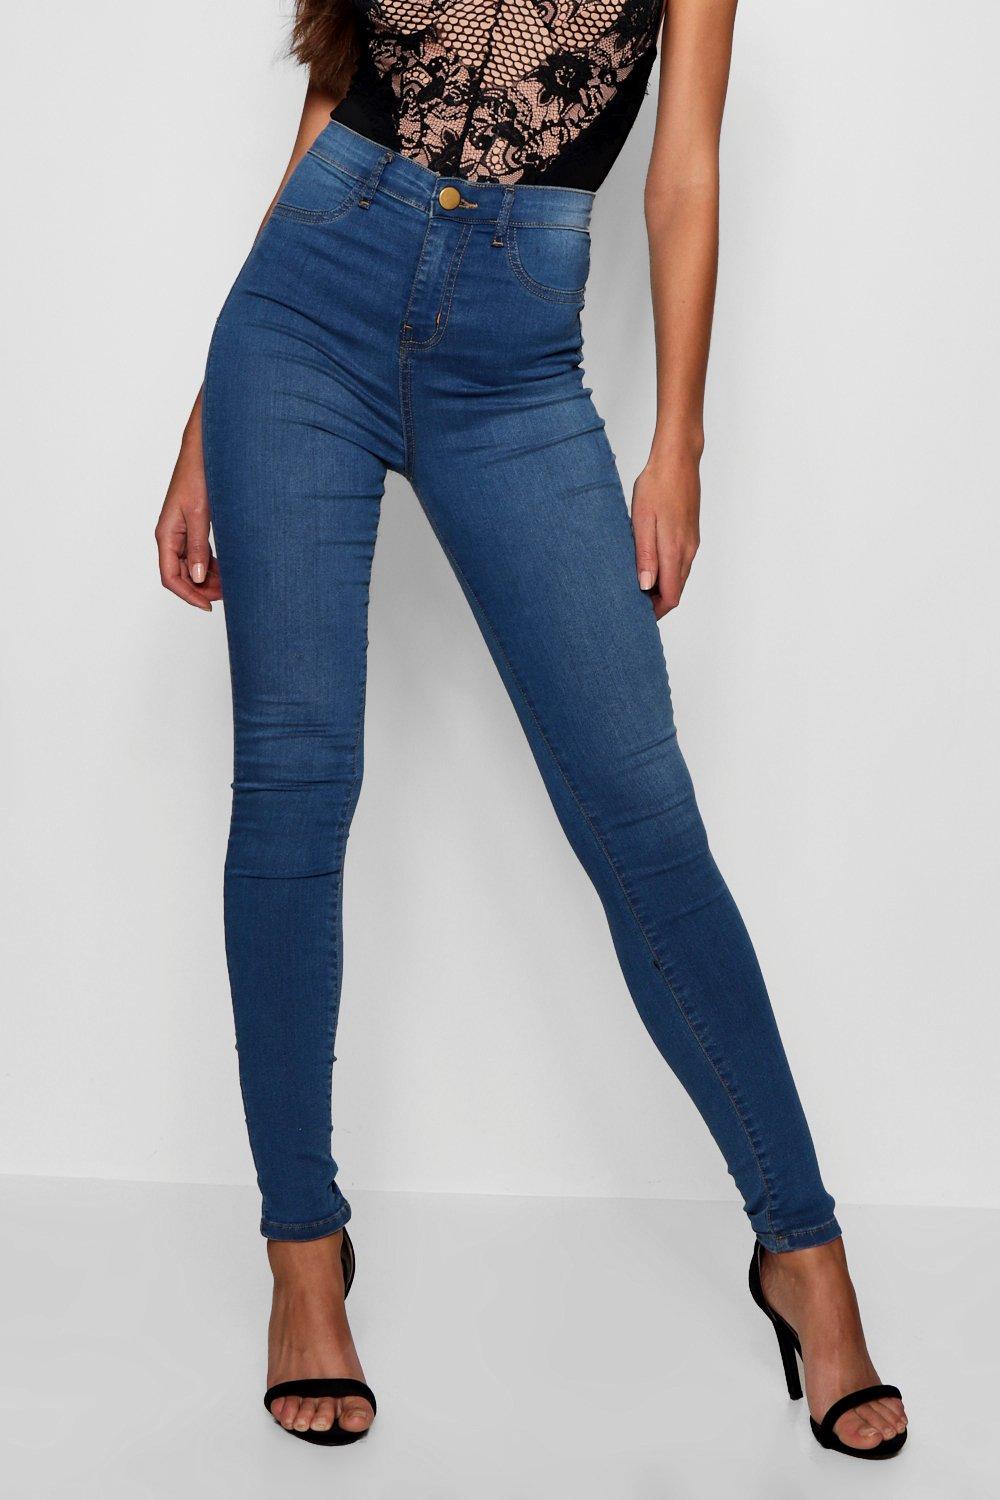 Jennyfer Jeggings & Skinny & Slim Red 36                  EU discount 70% WOMEN FASHION Jeans Jeggings & Skinny & Slim Basic 